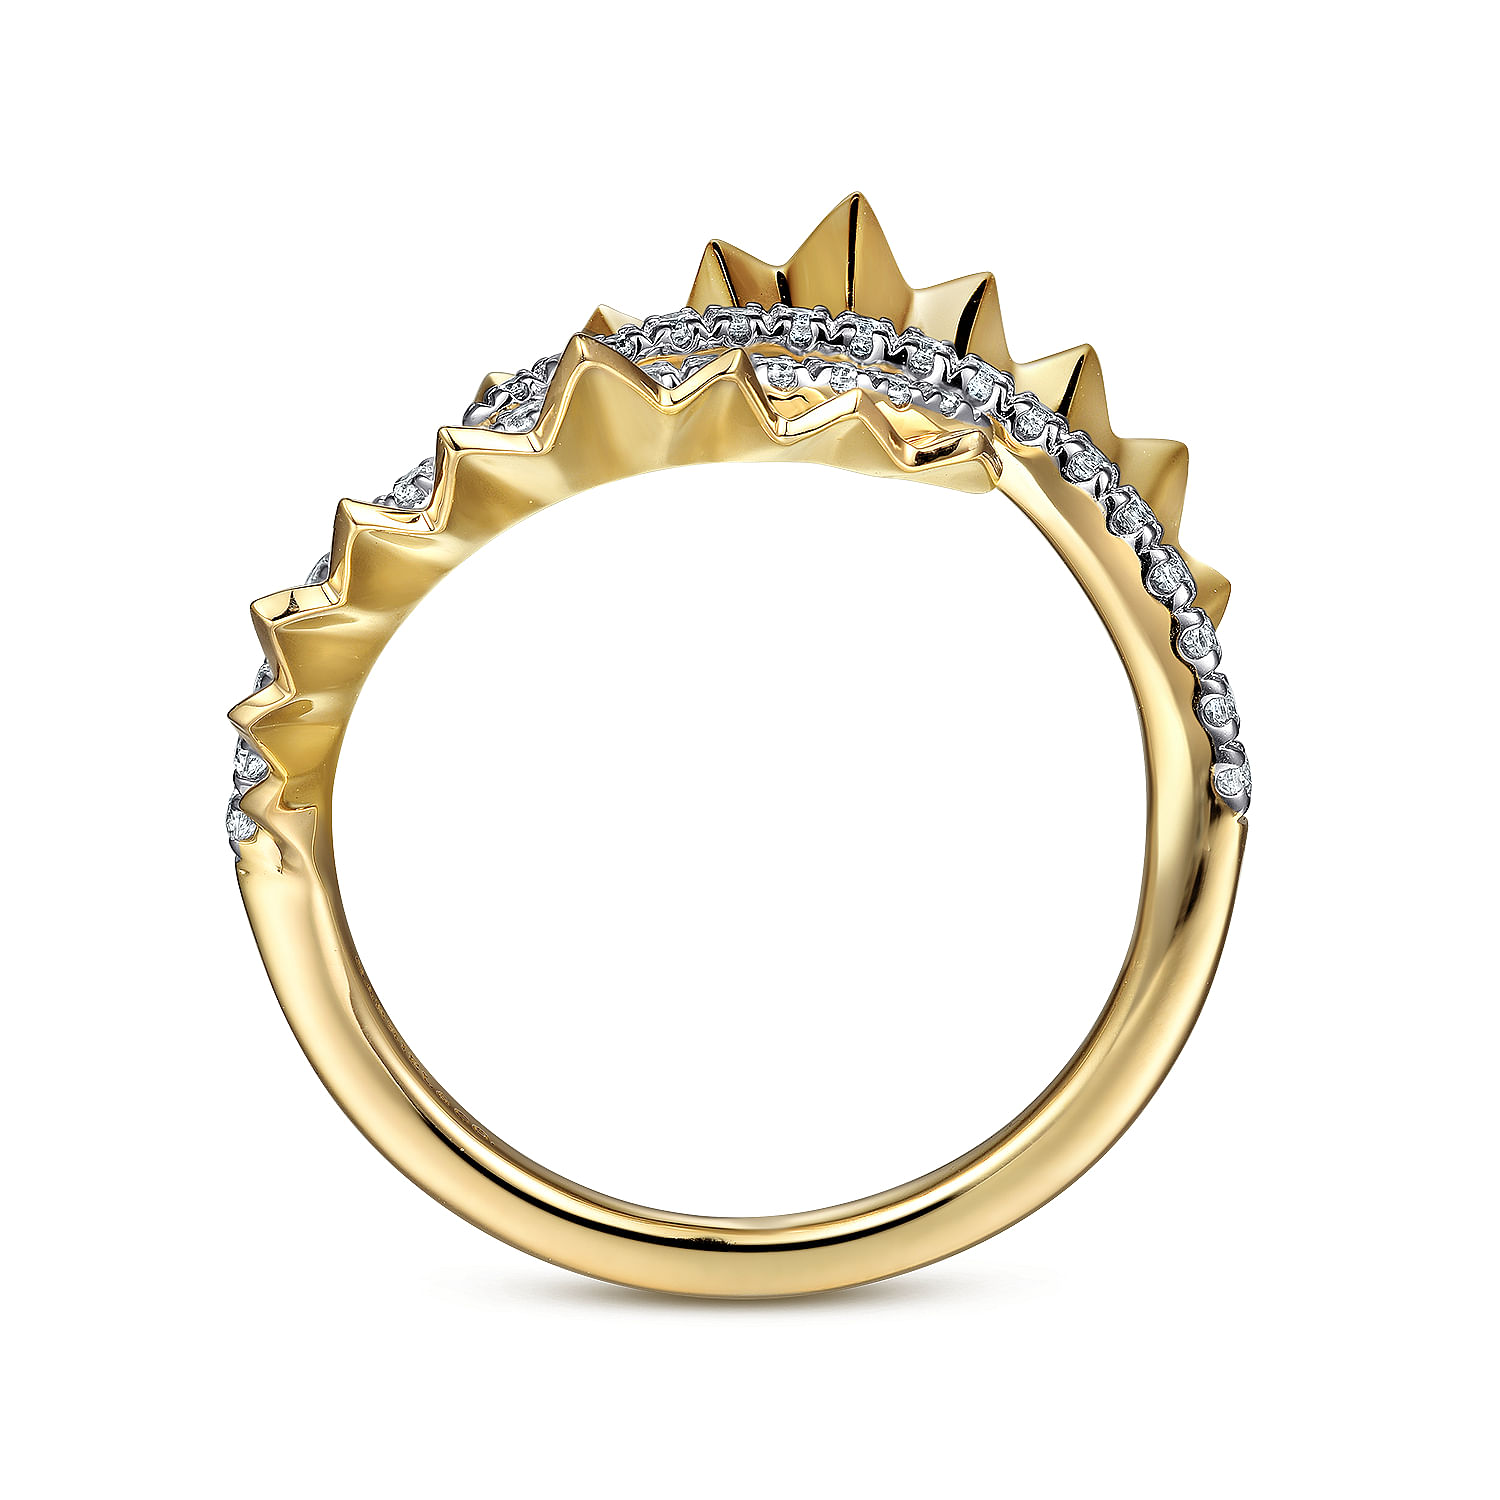 14K Yellow Gold Diamond Bypass Ring with Diamond Cut Texture